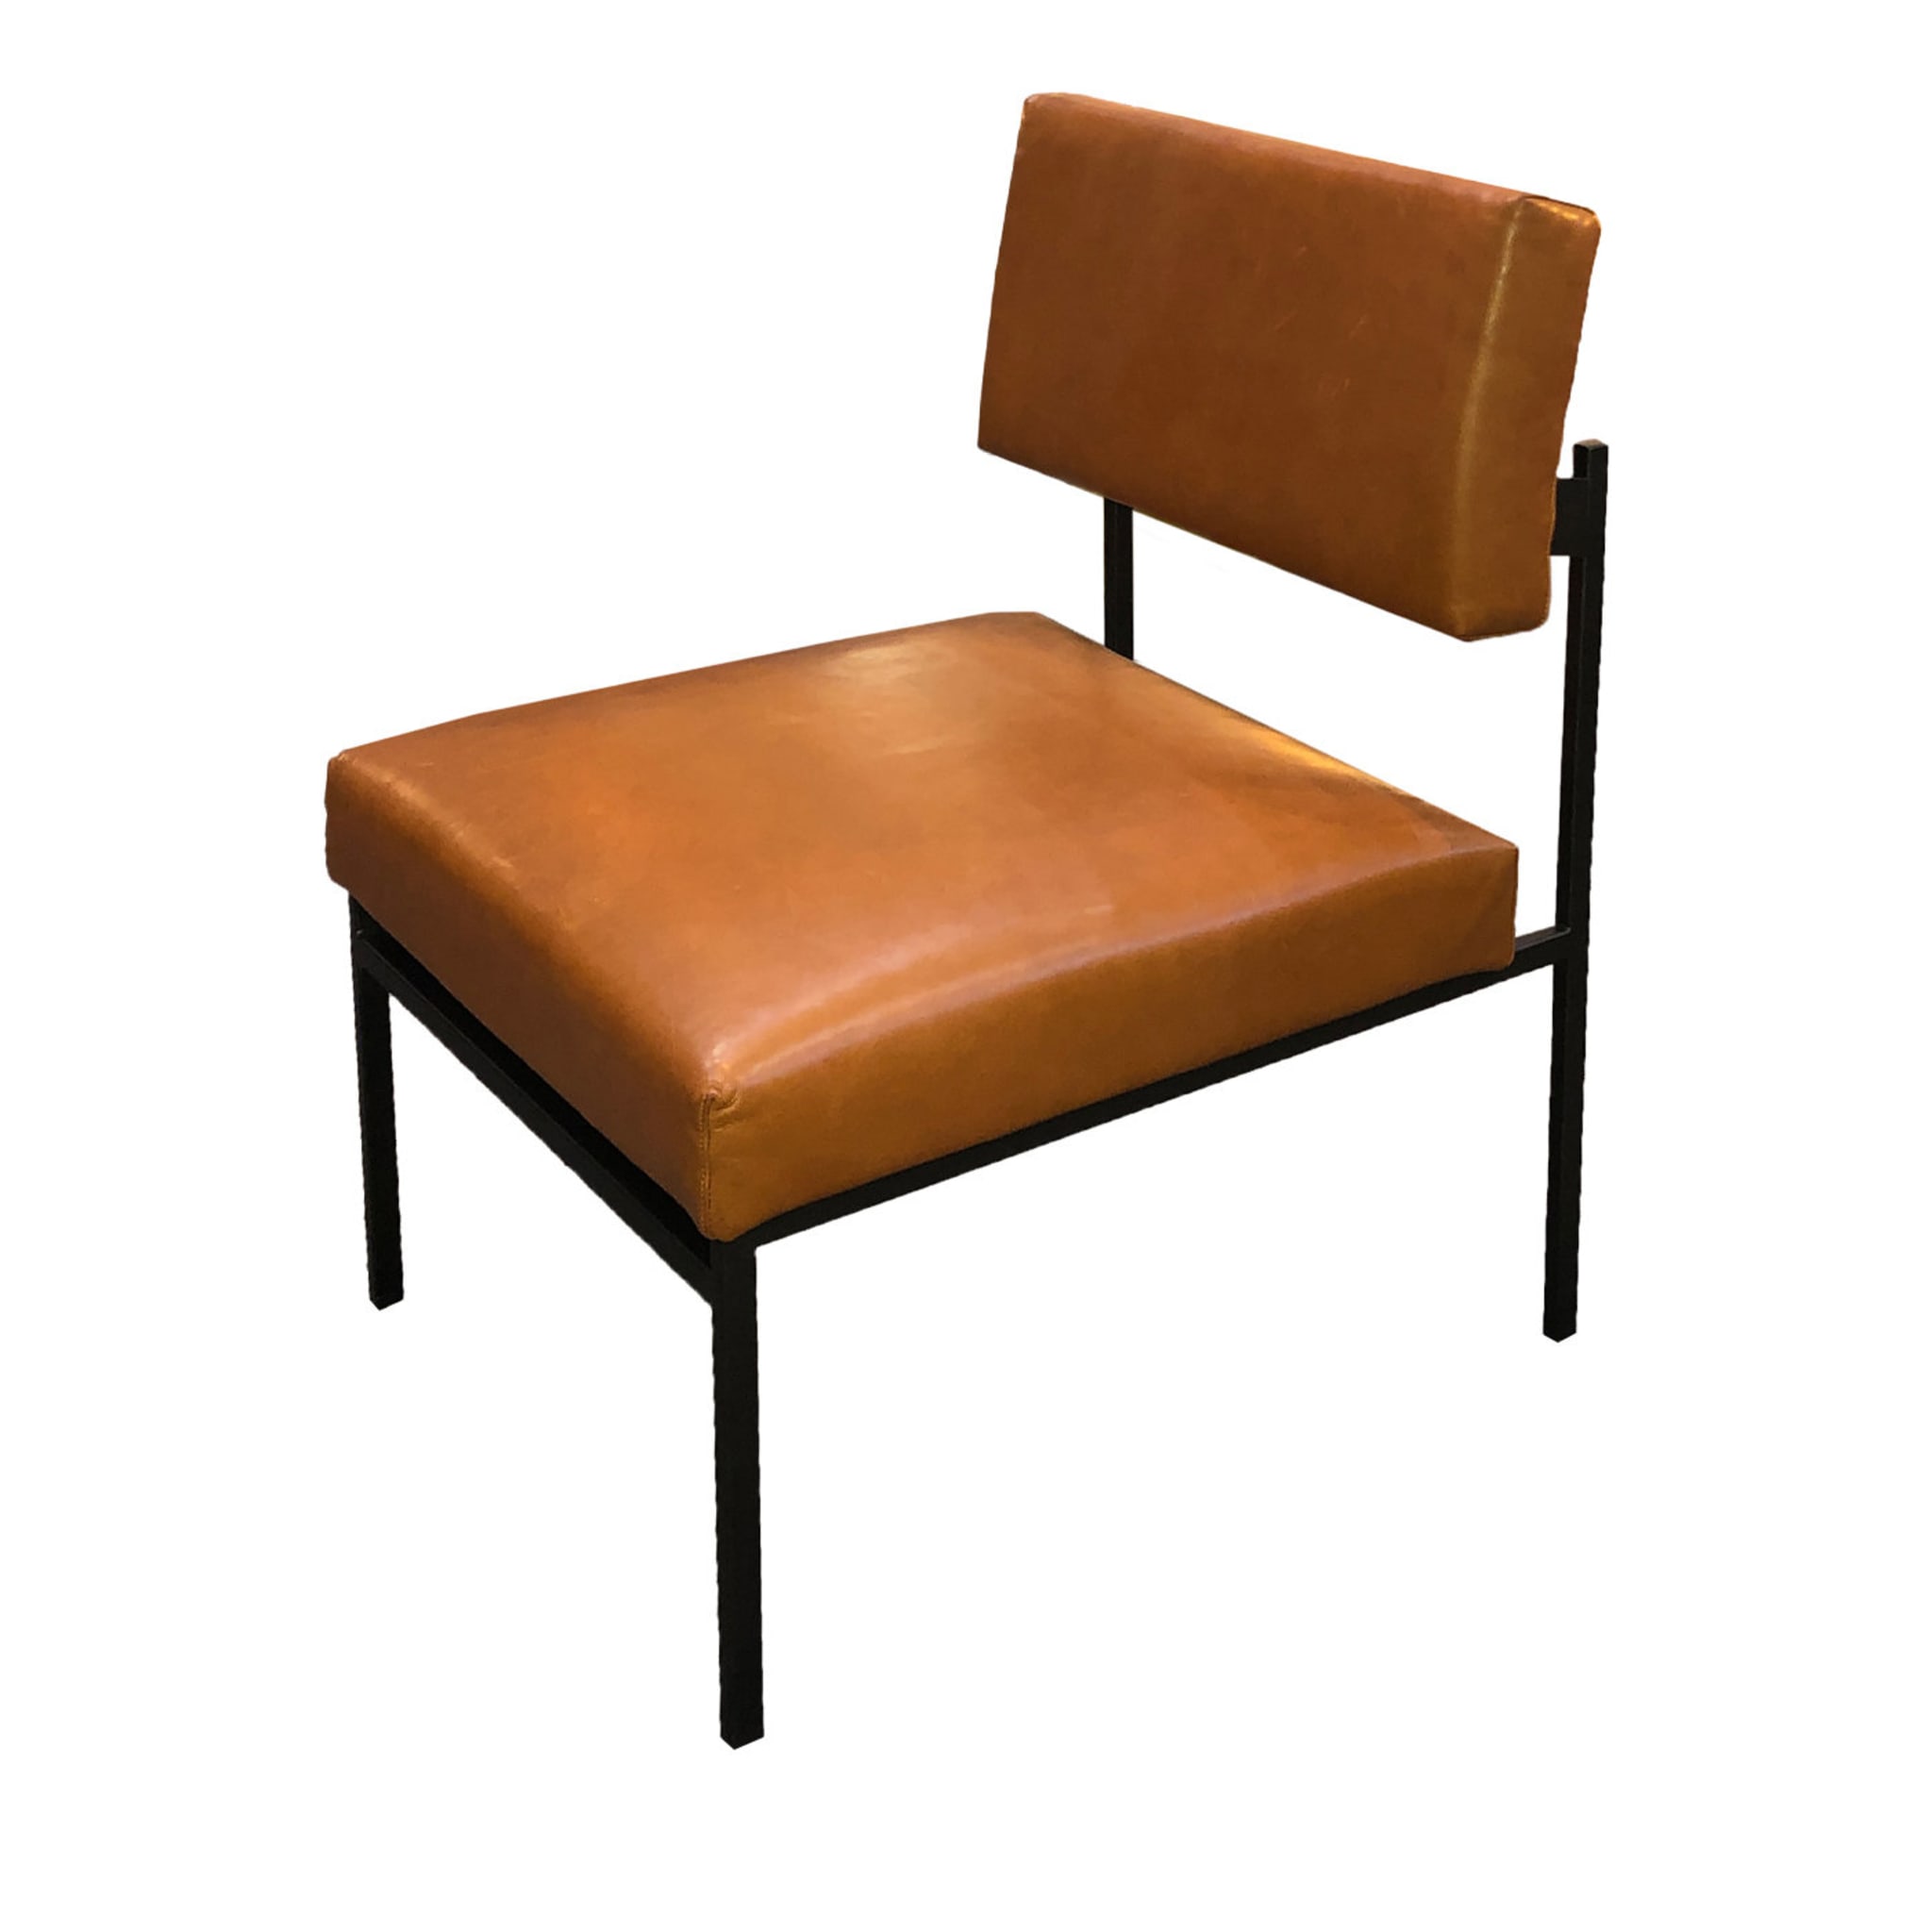 Aurea Bio Brown Leather Chair by CtrlZak and Davide Barzaghi  - Main view